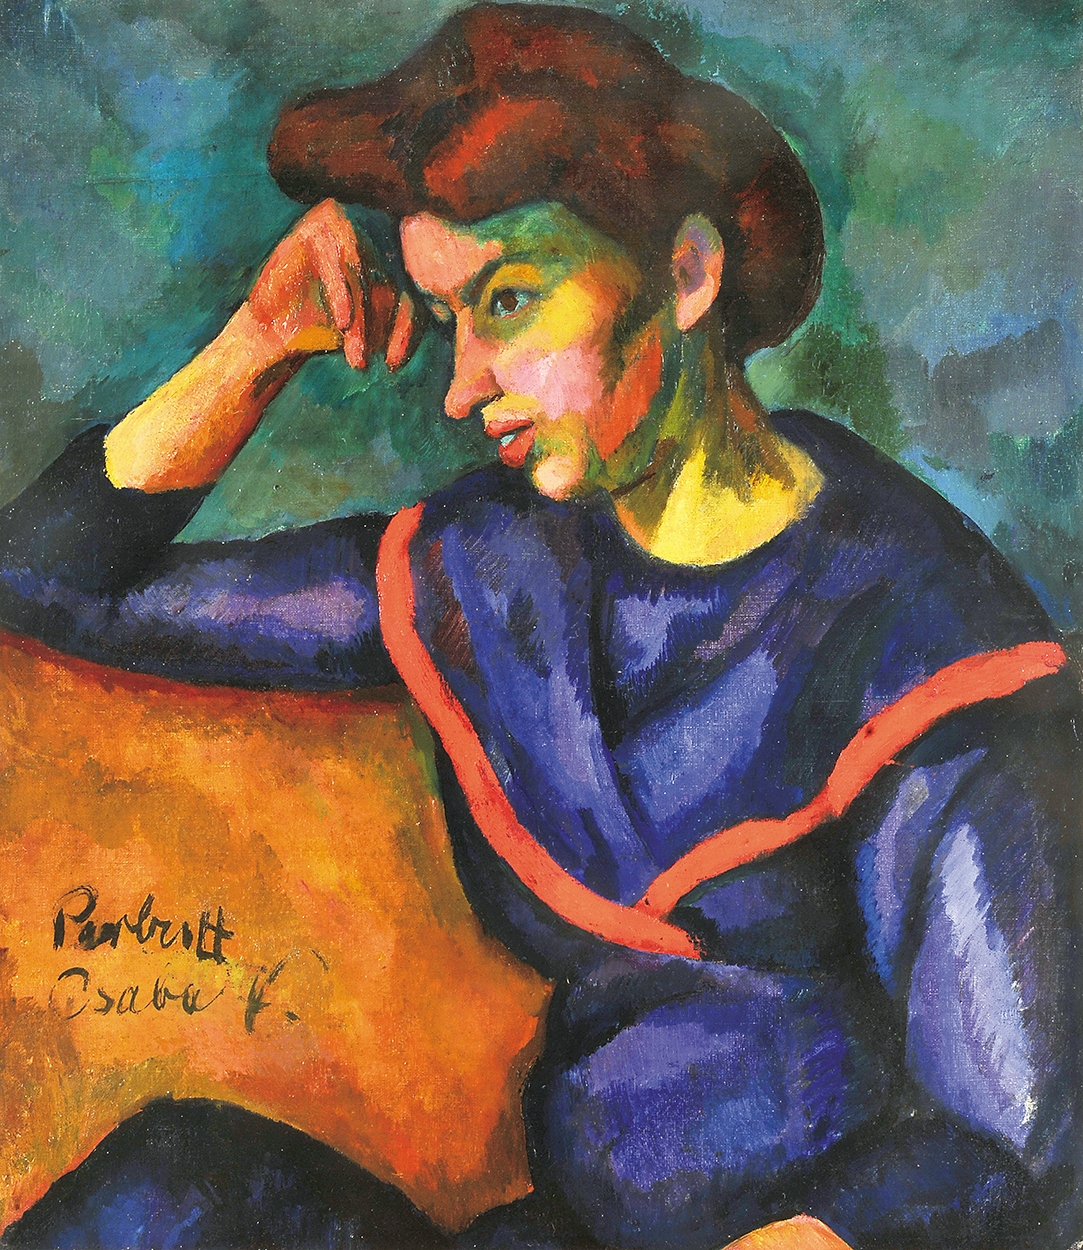 Perlrott-Csaba Vilmos (1880-1955) Woman with Red hair, around 1909